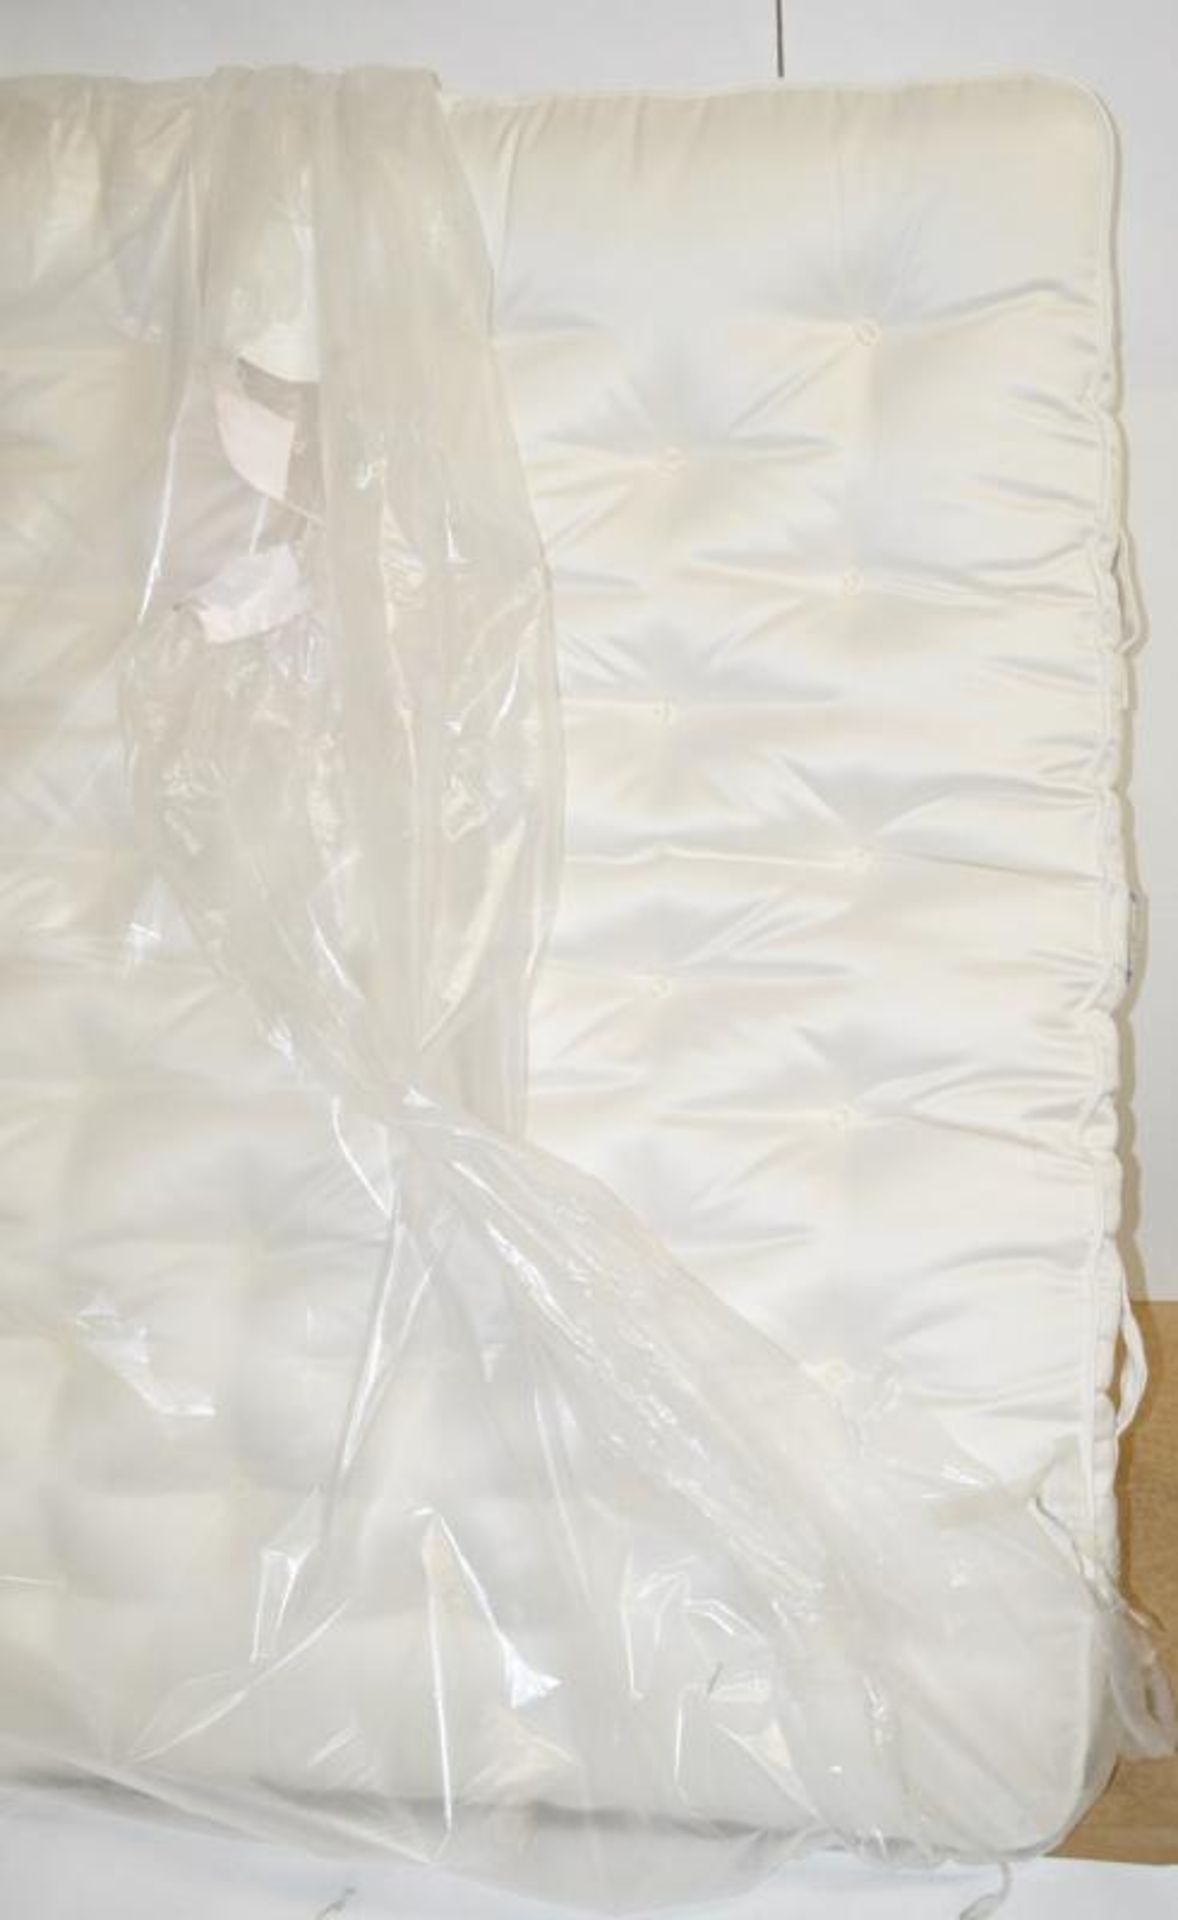 1 x Vispring 'Bedstead Supreme' Luxury FIRM Mattress - Size: 175 x 200 x 23cm - British Made - Image 7 of 10